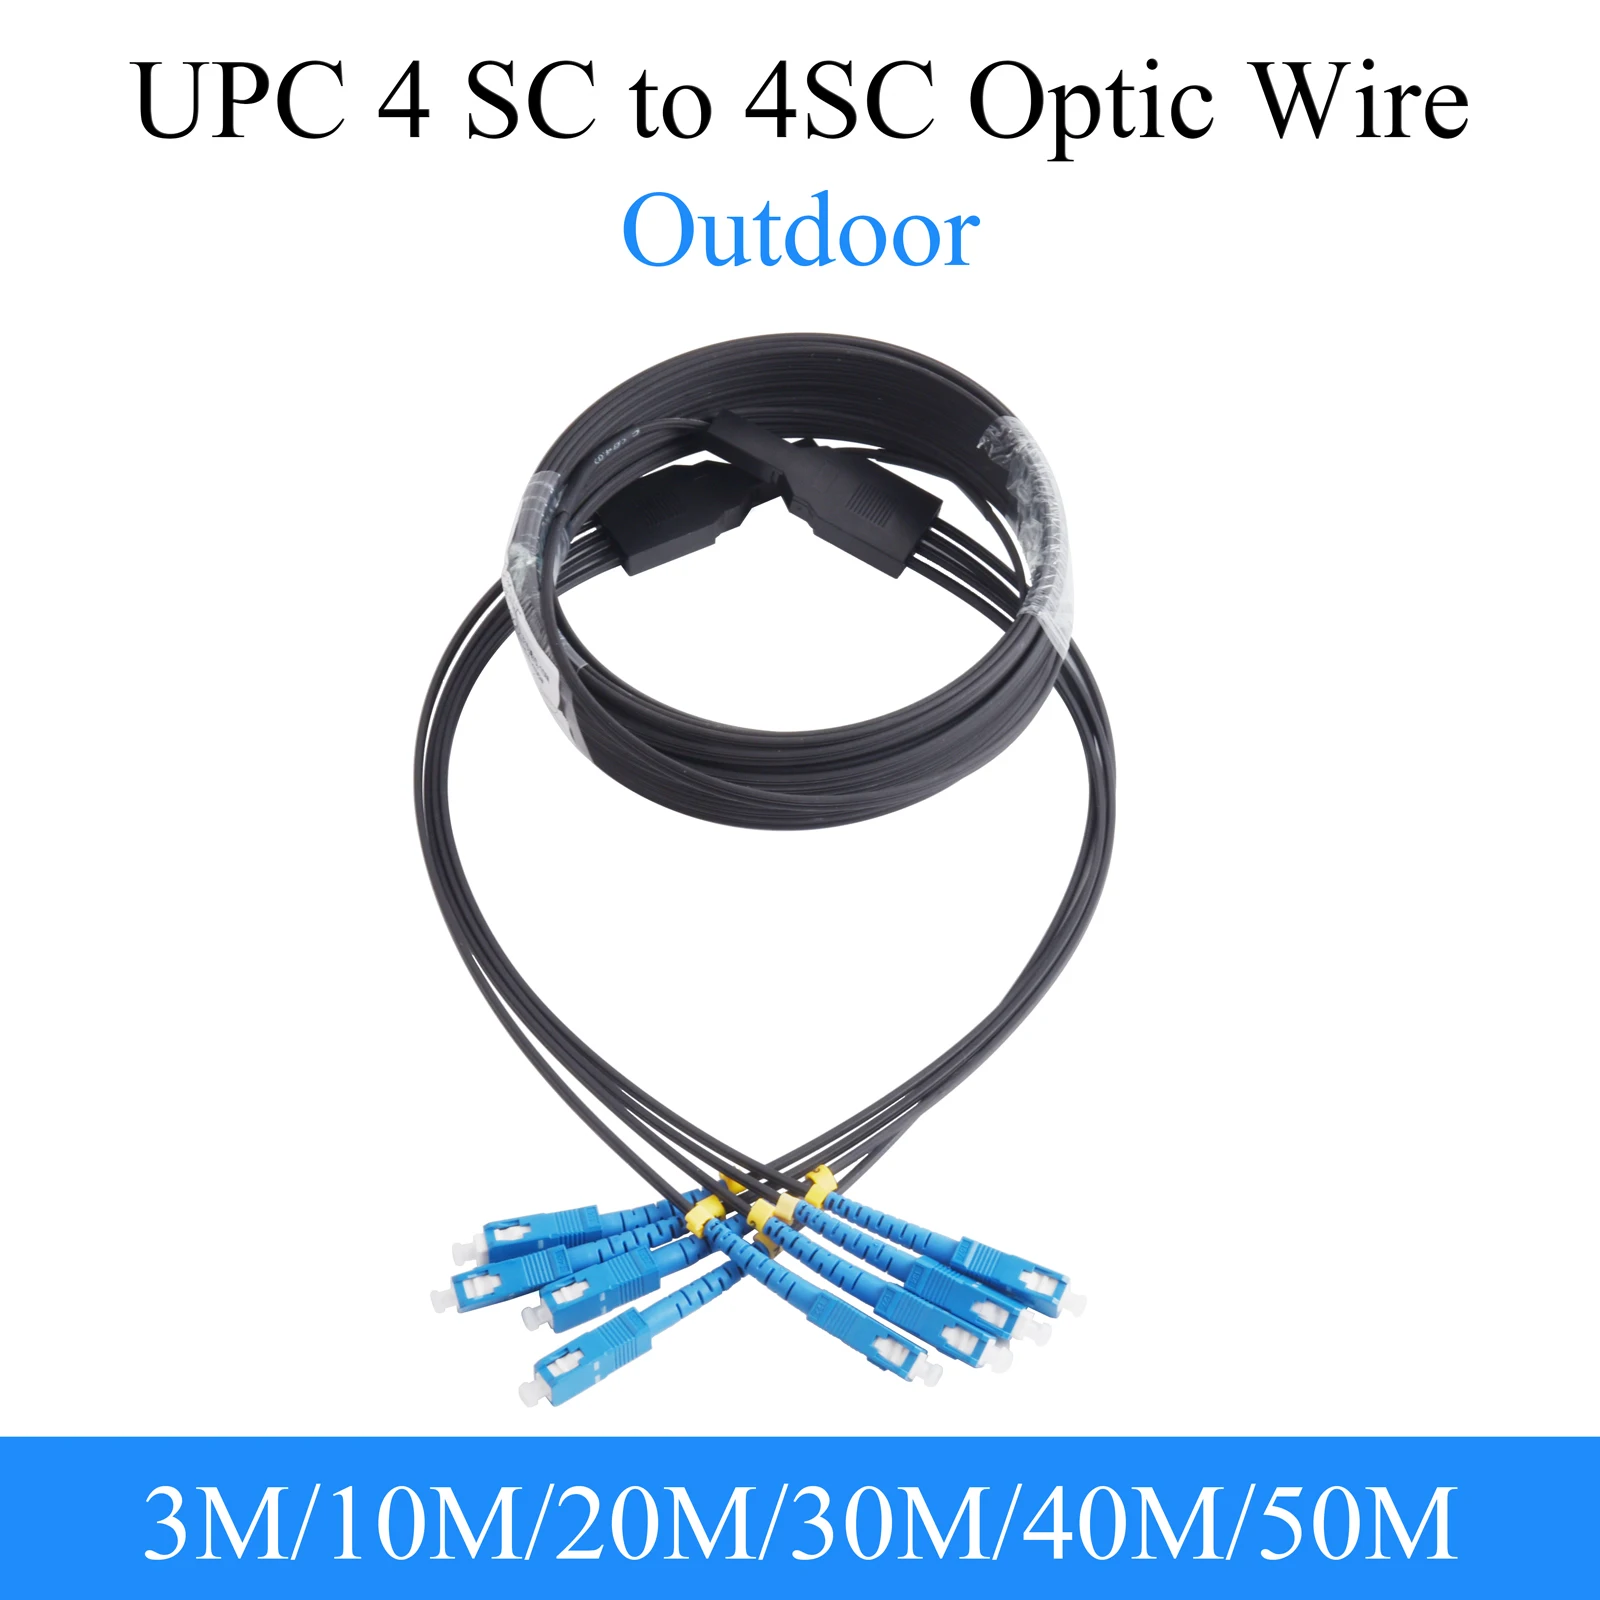 

Fiber Optic Wire UPC 4 SC to 4 SC Optical Single-mode 4-core Outdoor Extension Cable Simplex Patch Cord 3M/10M/20M/30M/40M/50M